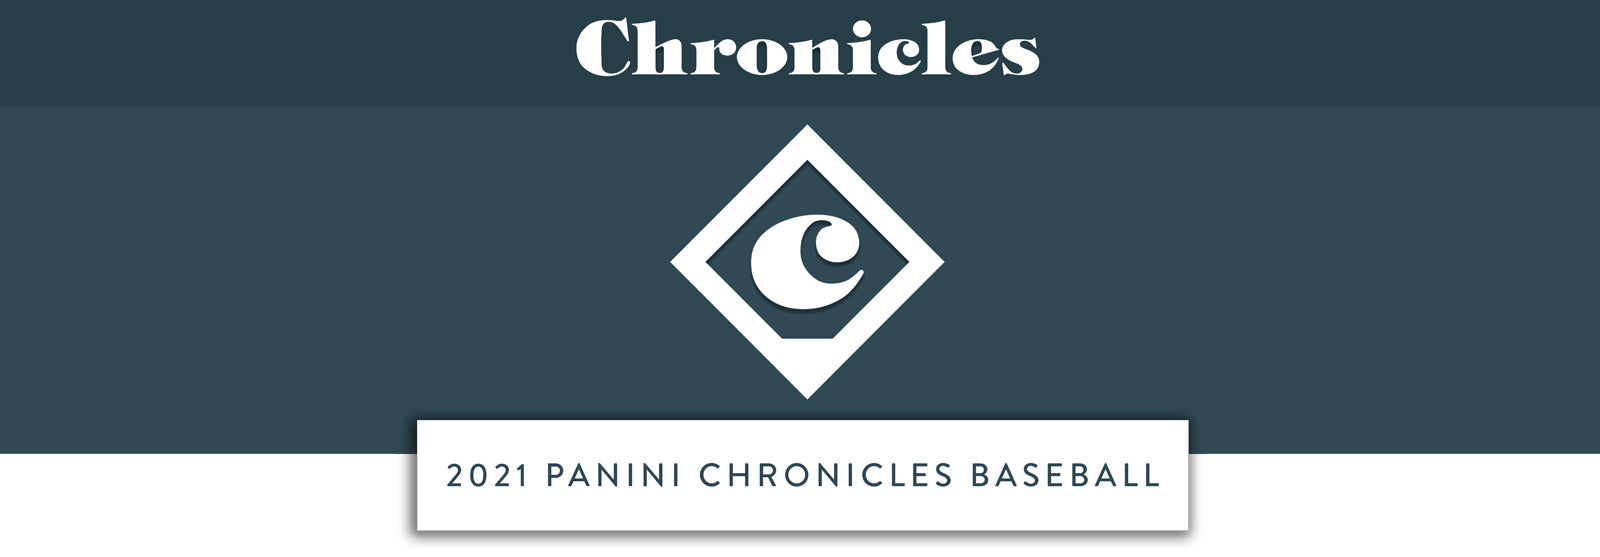 Release to Watch: 2021 Panini Chronicles Baseball 